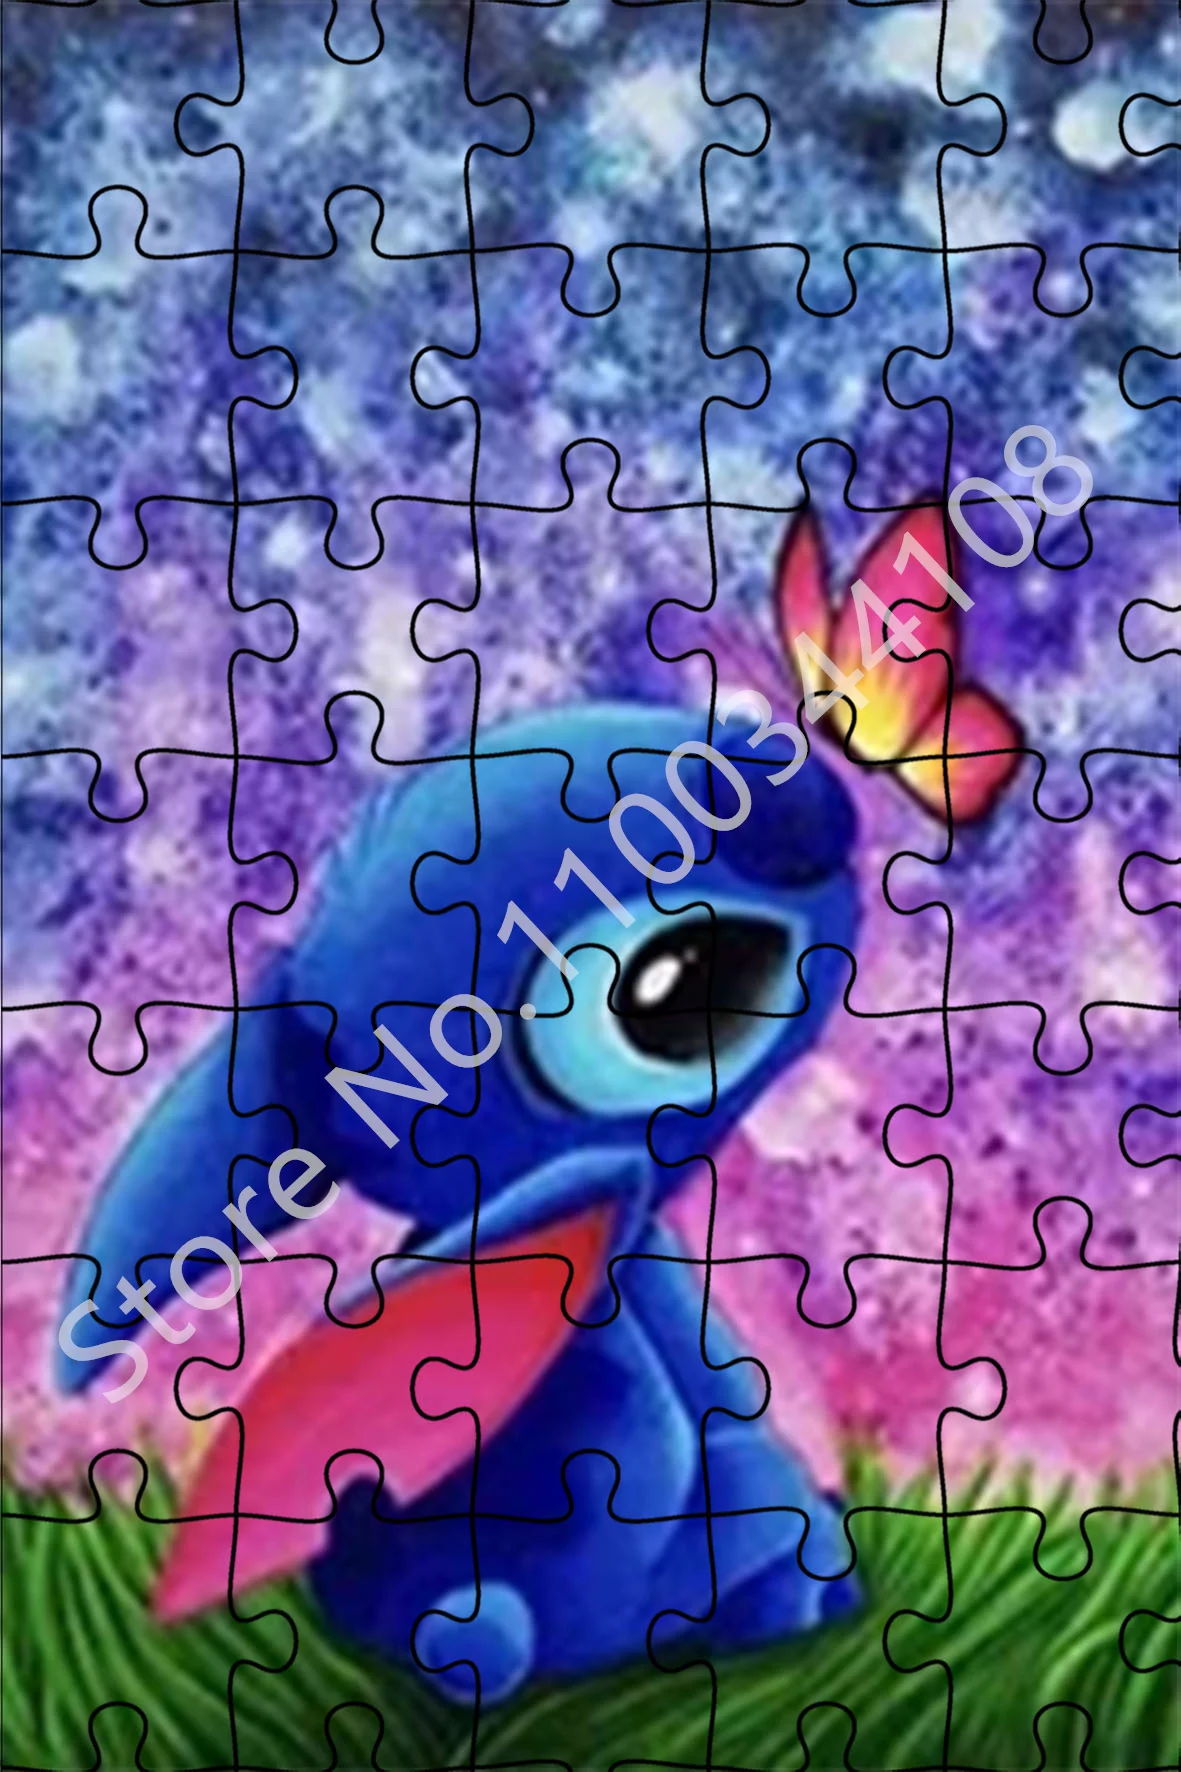 1000 Piece Puzzle Disney Movie Lilo & Stitch Diy Cartoon Creative